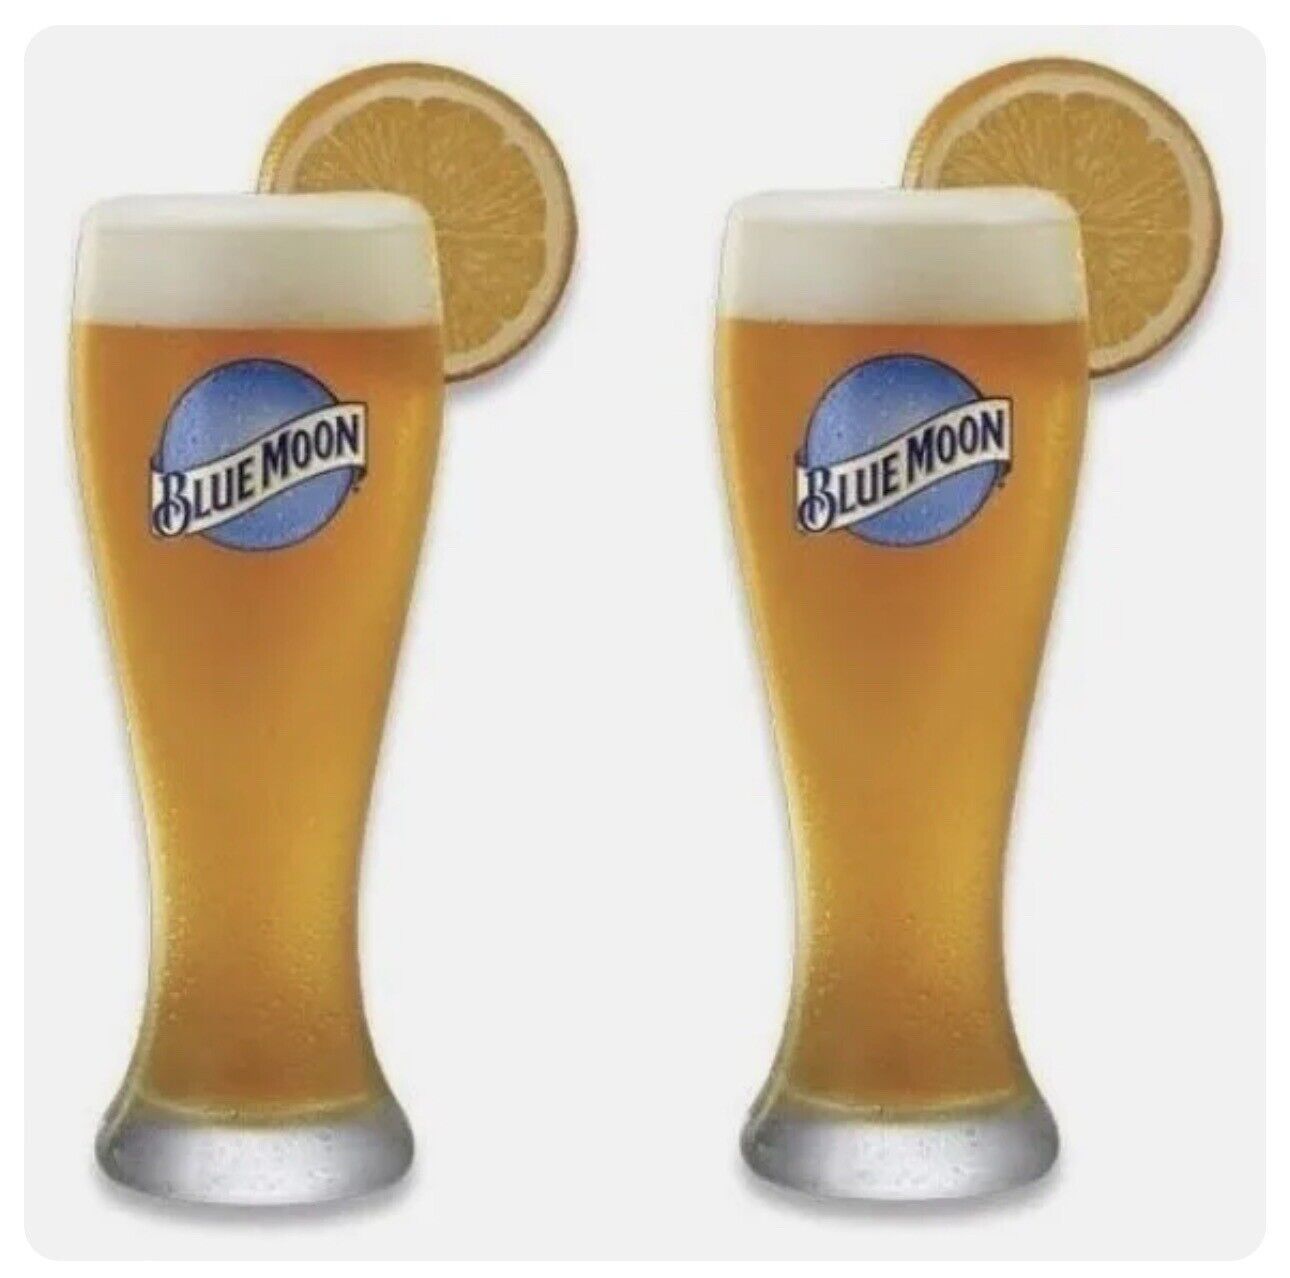 Blue Moon 16 oz Pilsner Beer Glass - Set of Two (2) Glasses - New & 